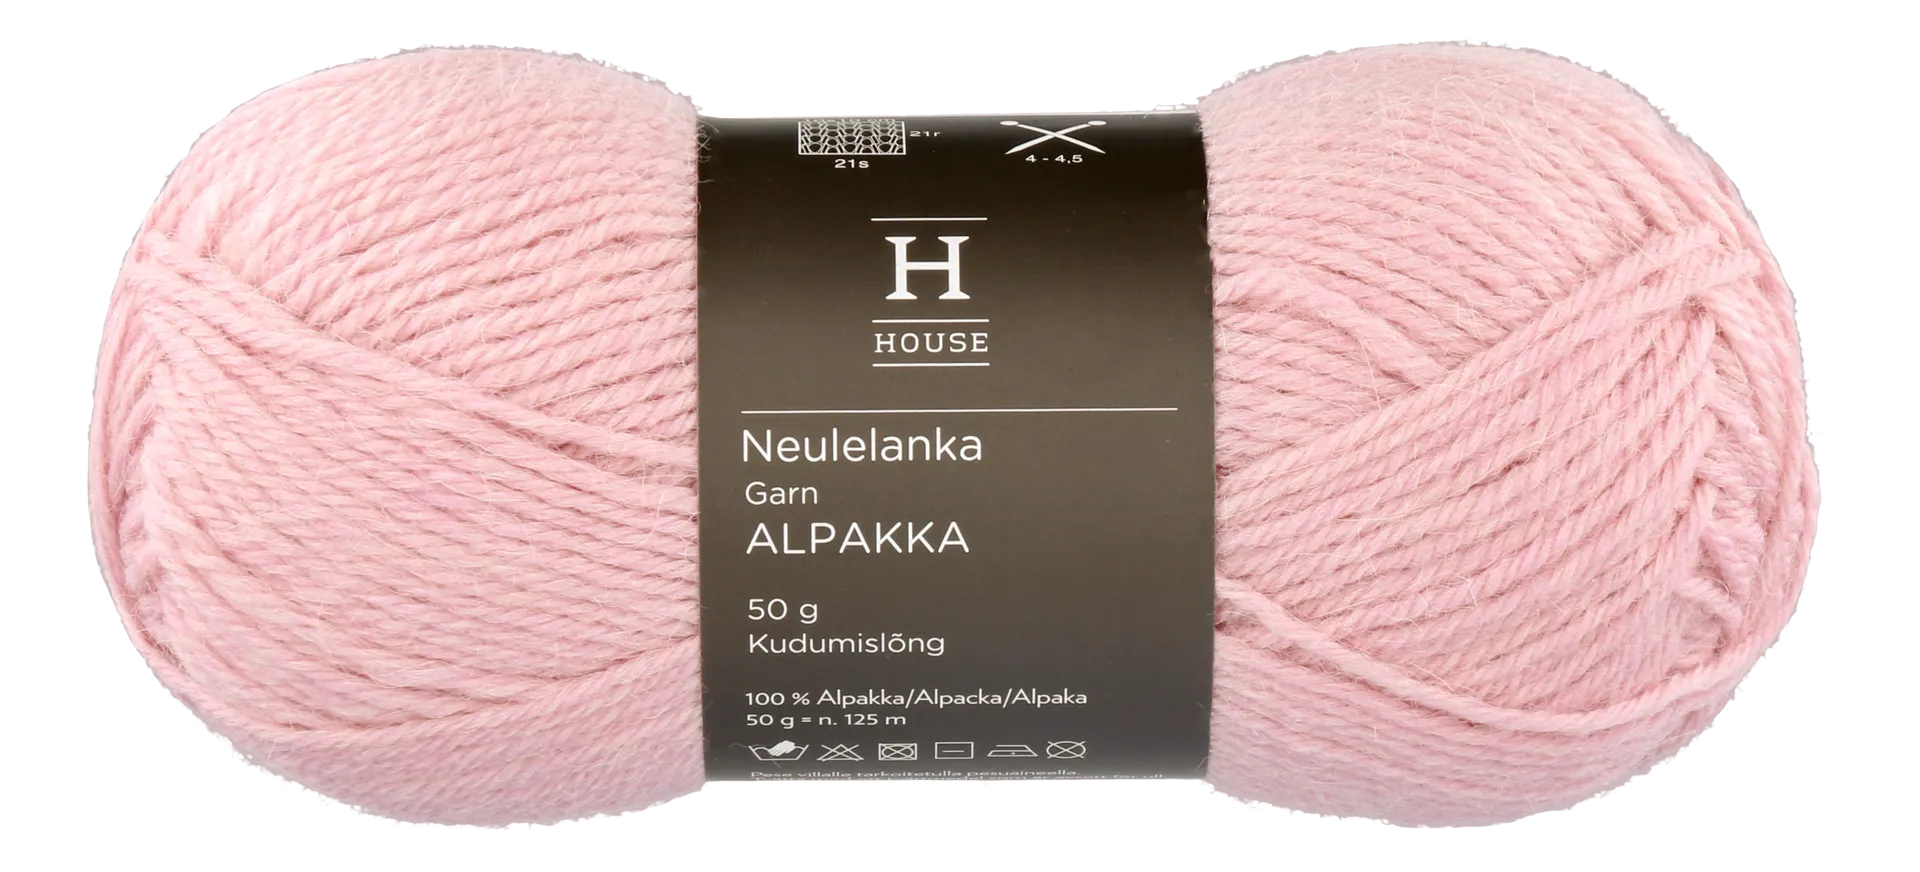 House neulelanka Alpakka 710234 50 g Light Pink 11326